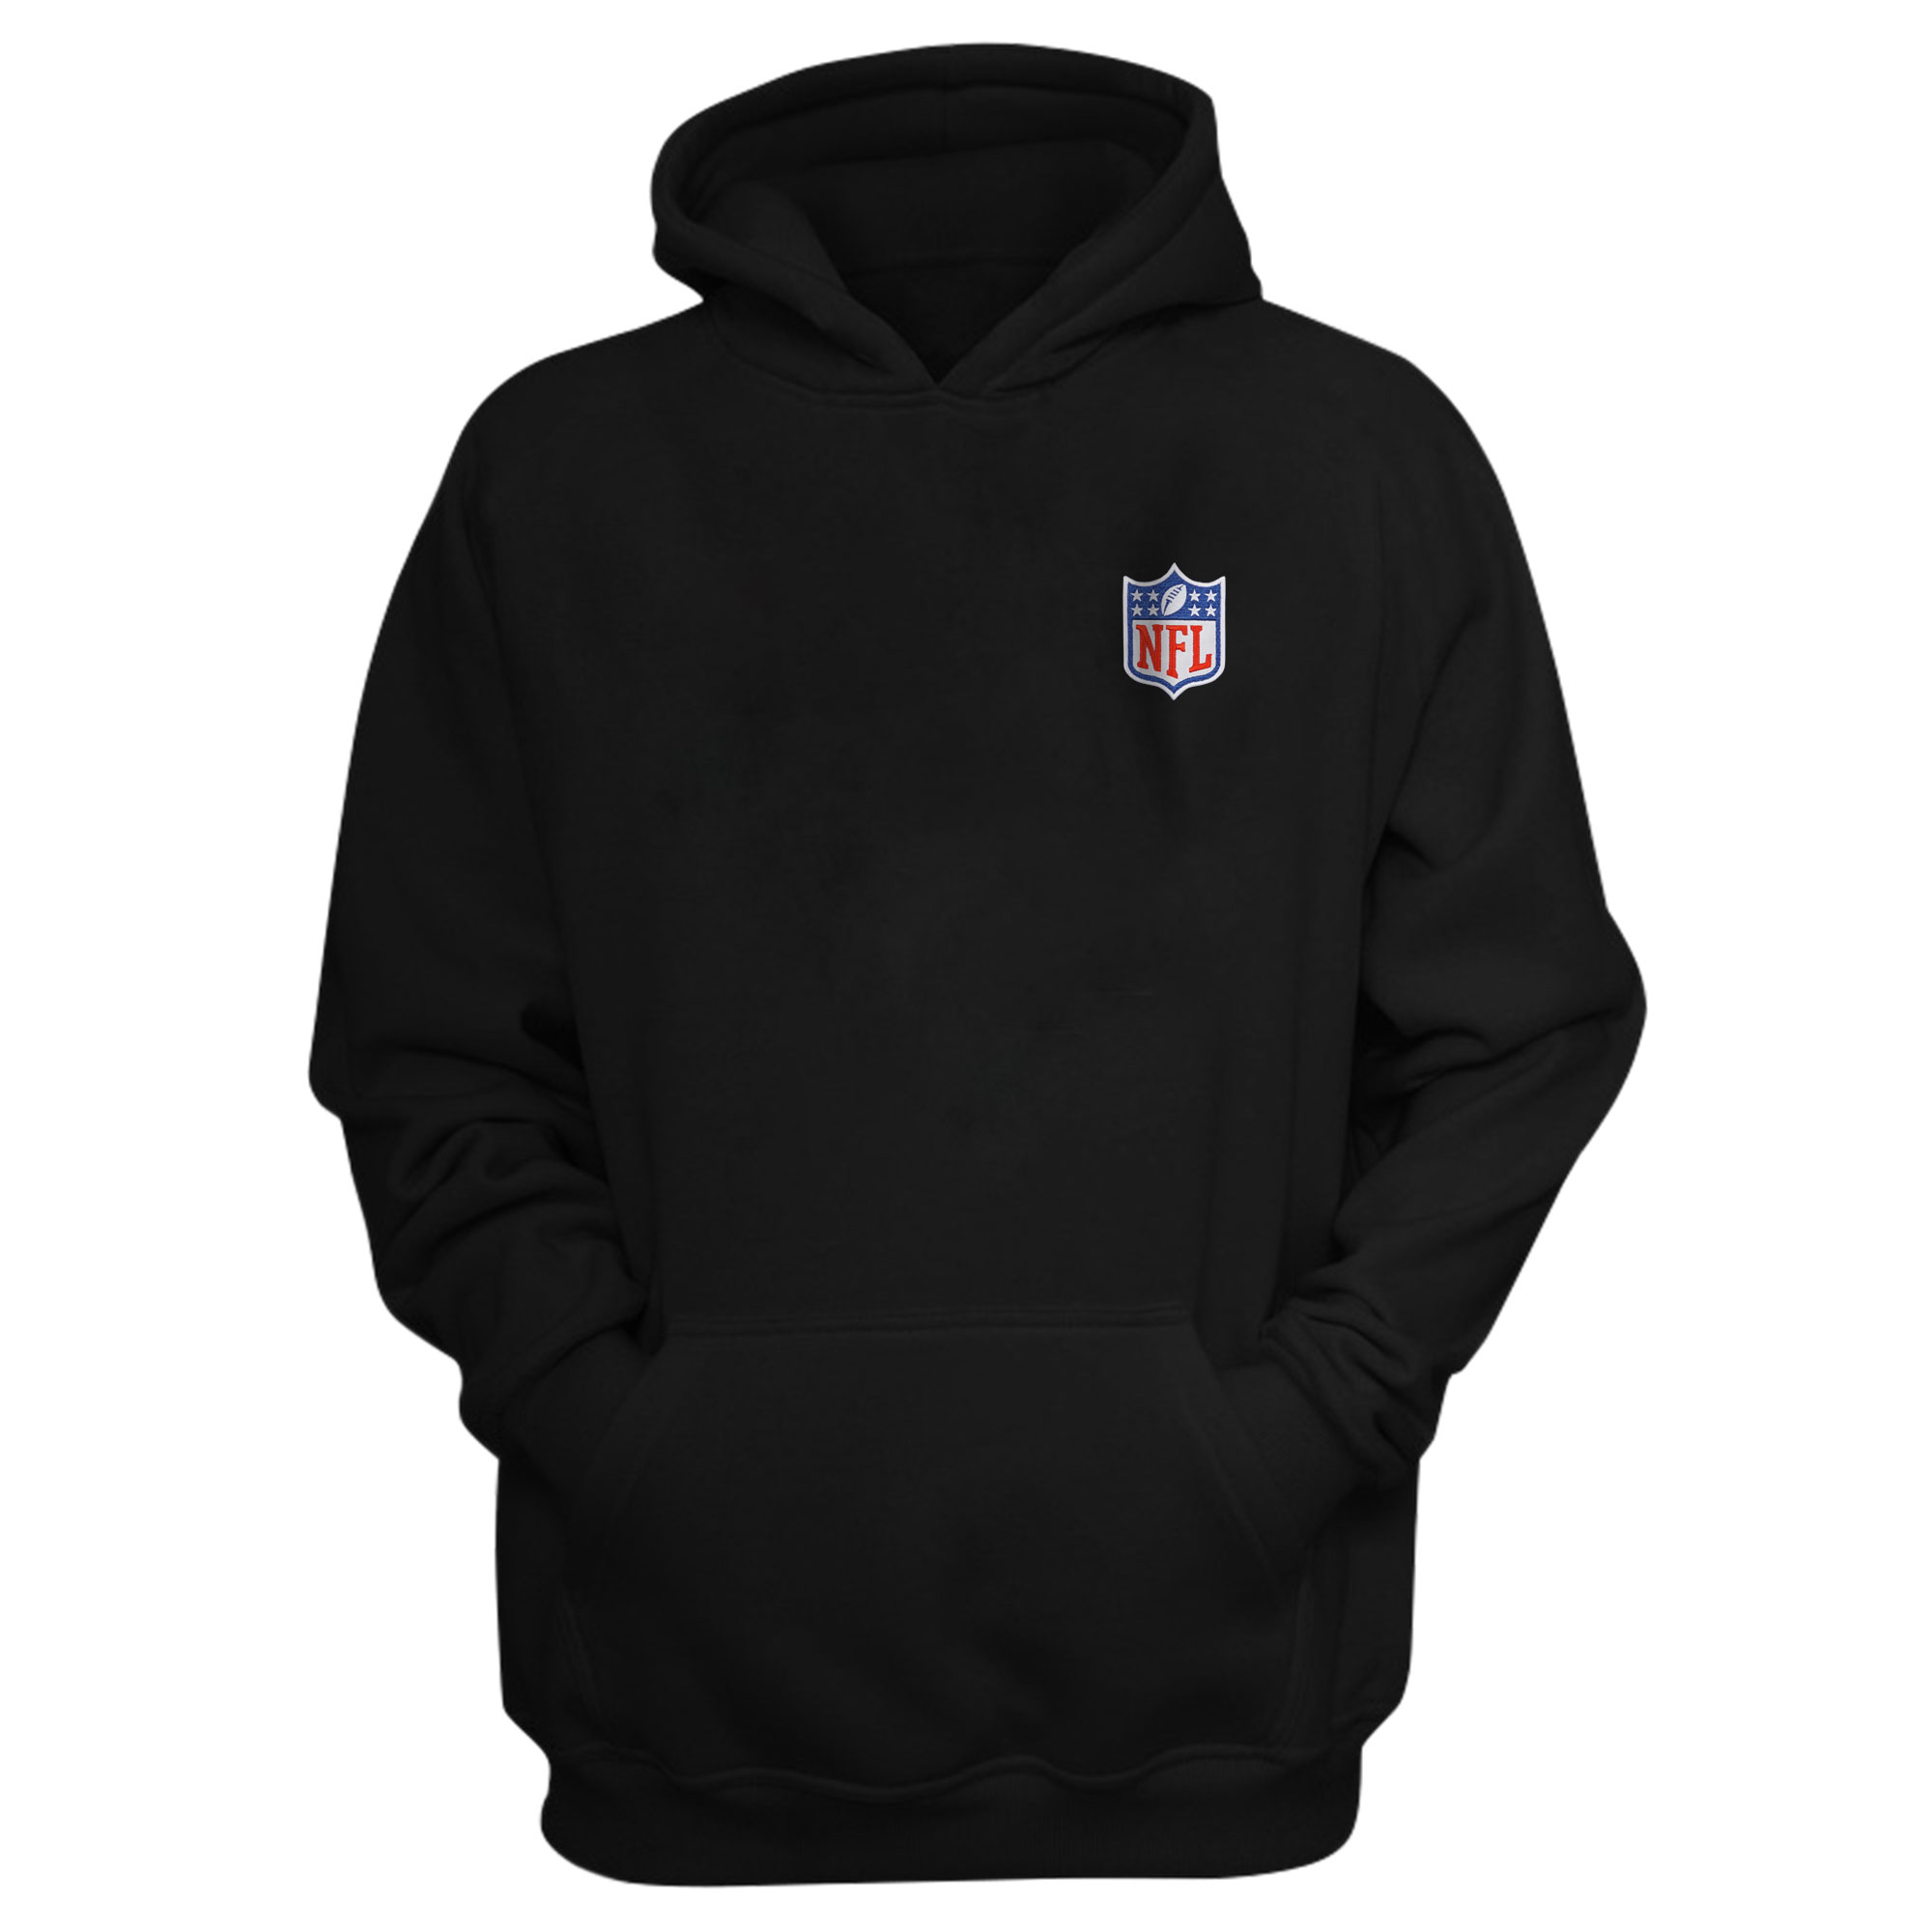 NFL Logo Hoodie (Örme)  (HD-RED-EMBR-NFL-LOGO)